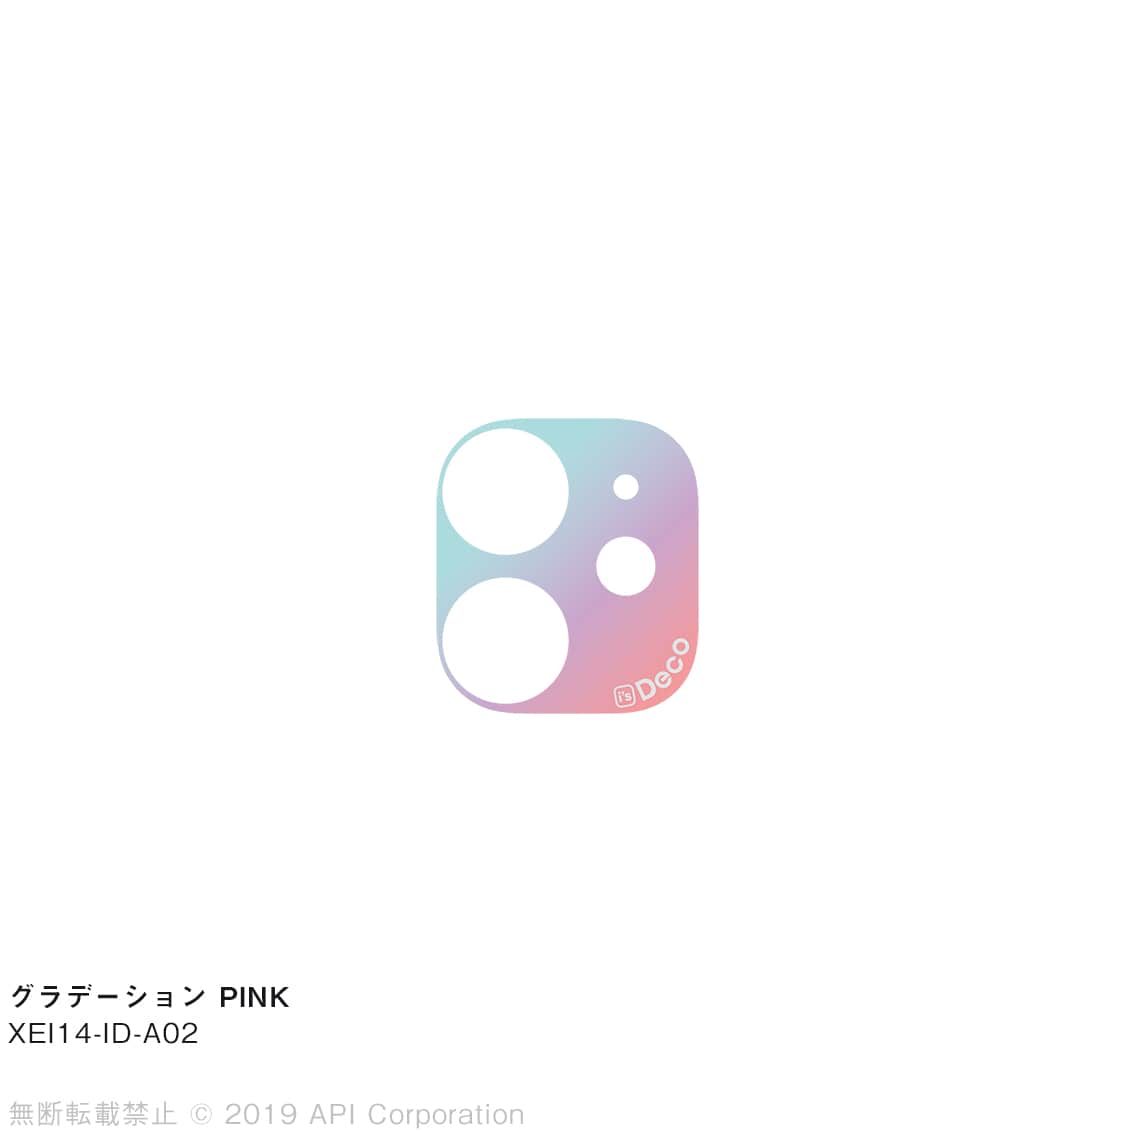 iPhone 11   i's Deco [PATTERN (A01-A04)］